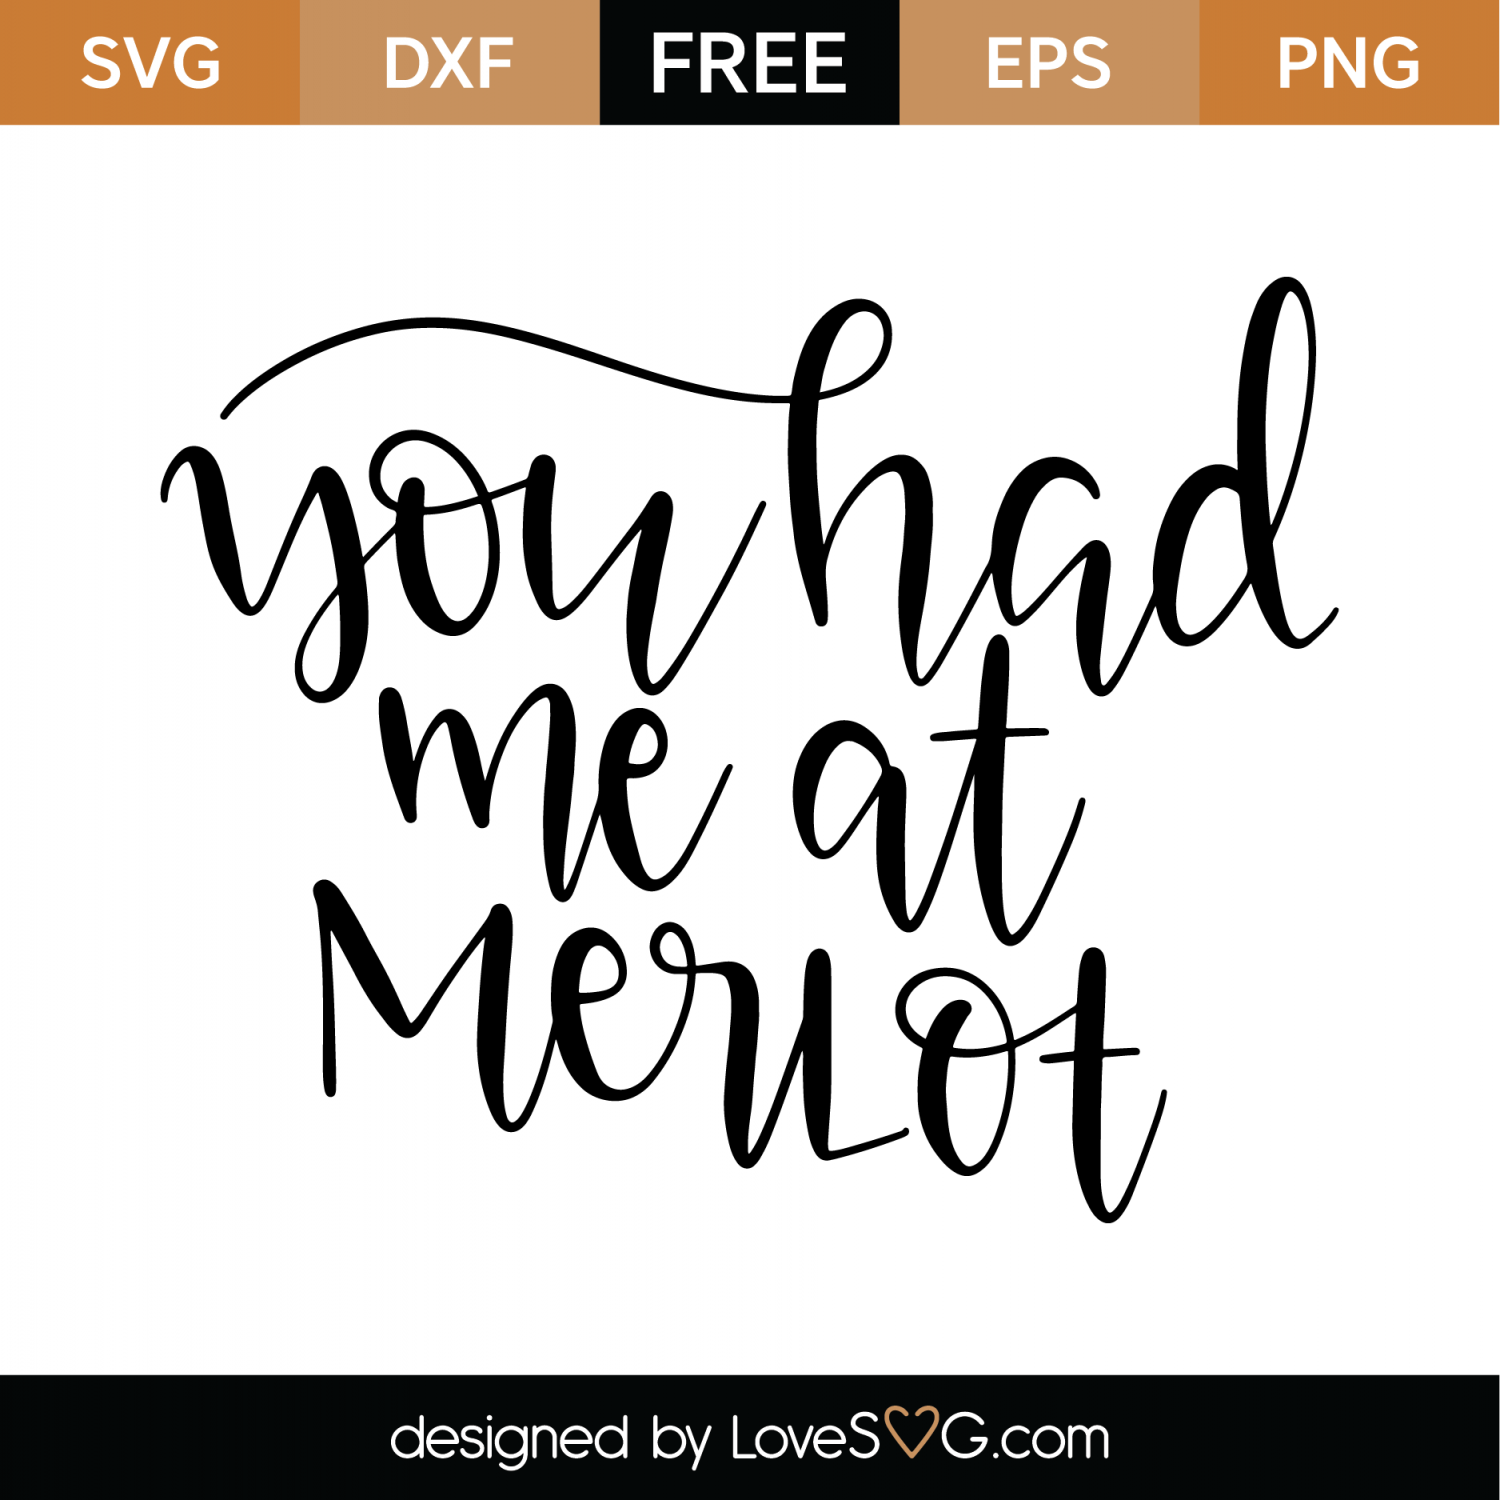 Download Free You Had Me At Merlot SVG Cut File | Lovesvg.com